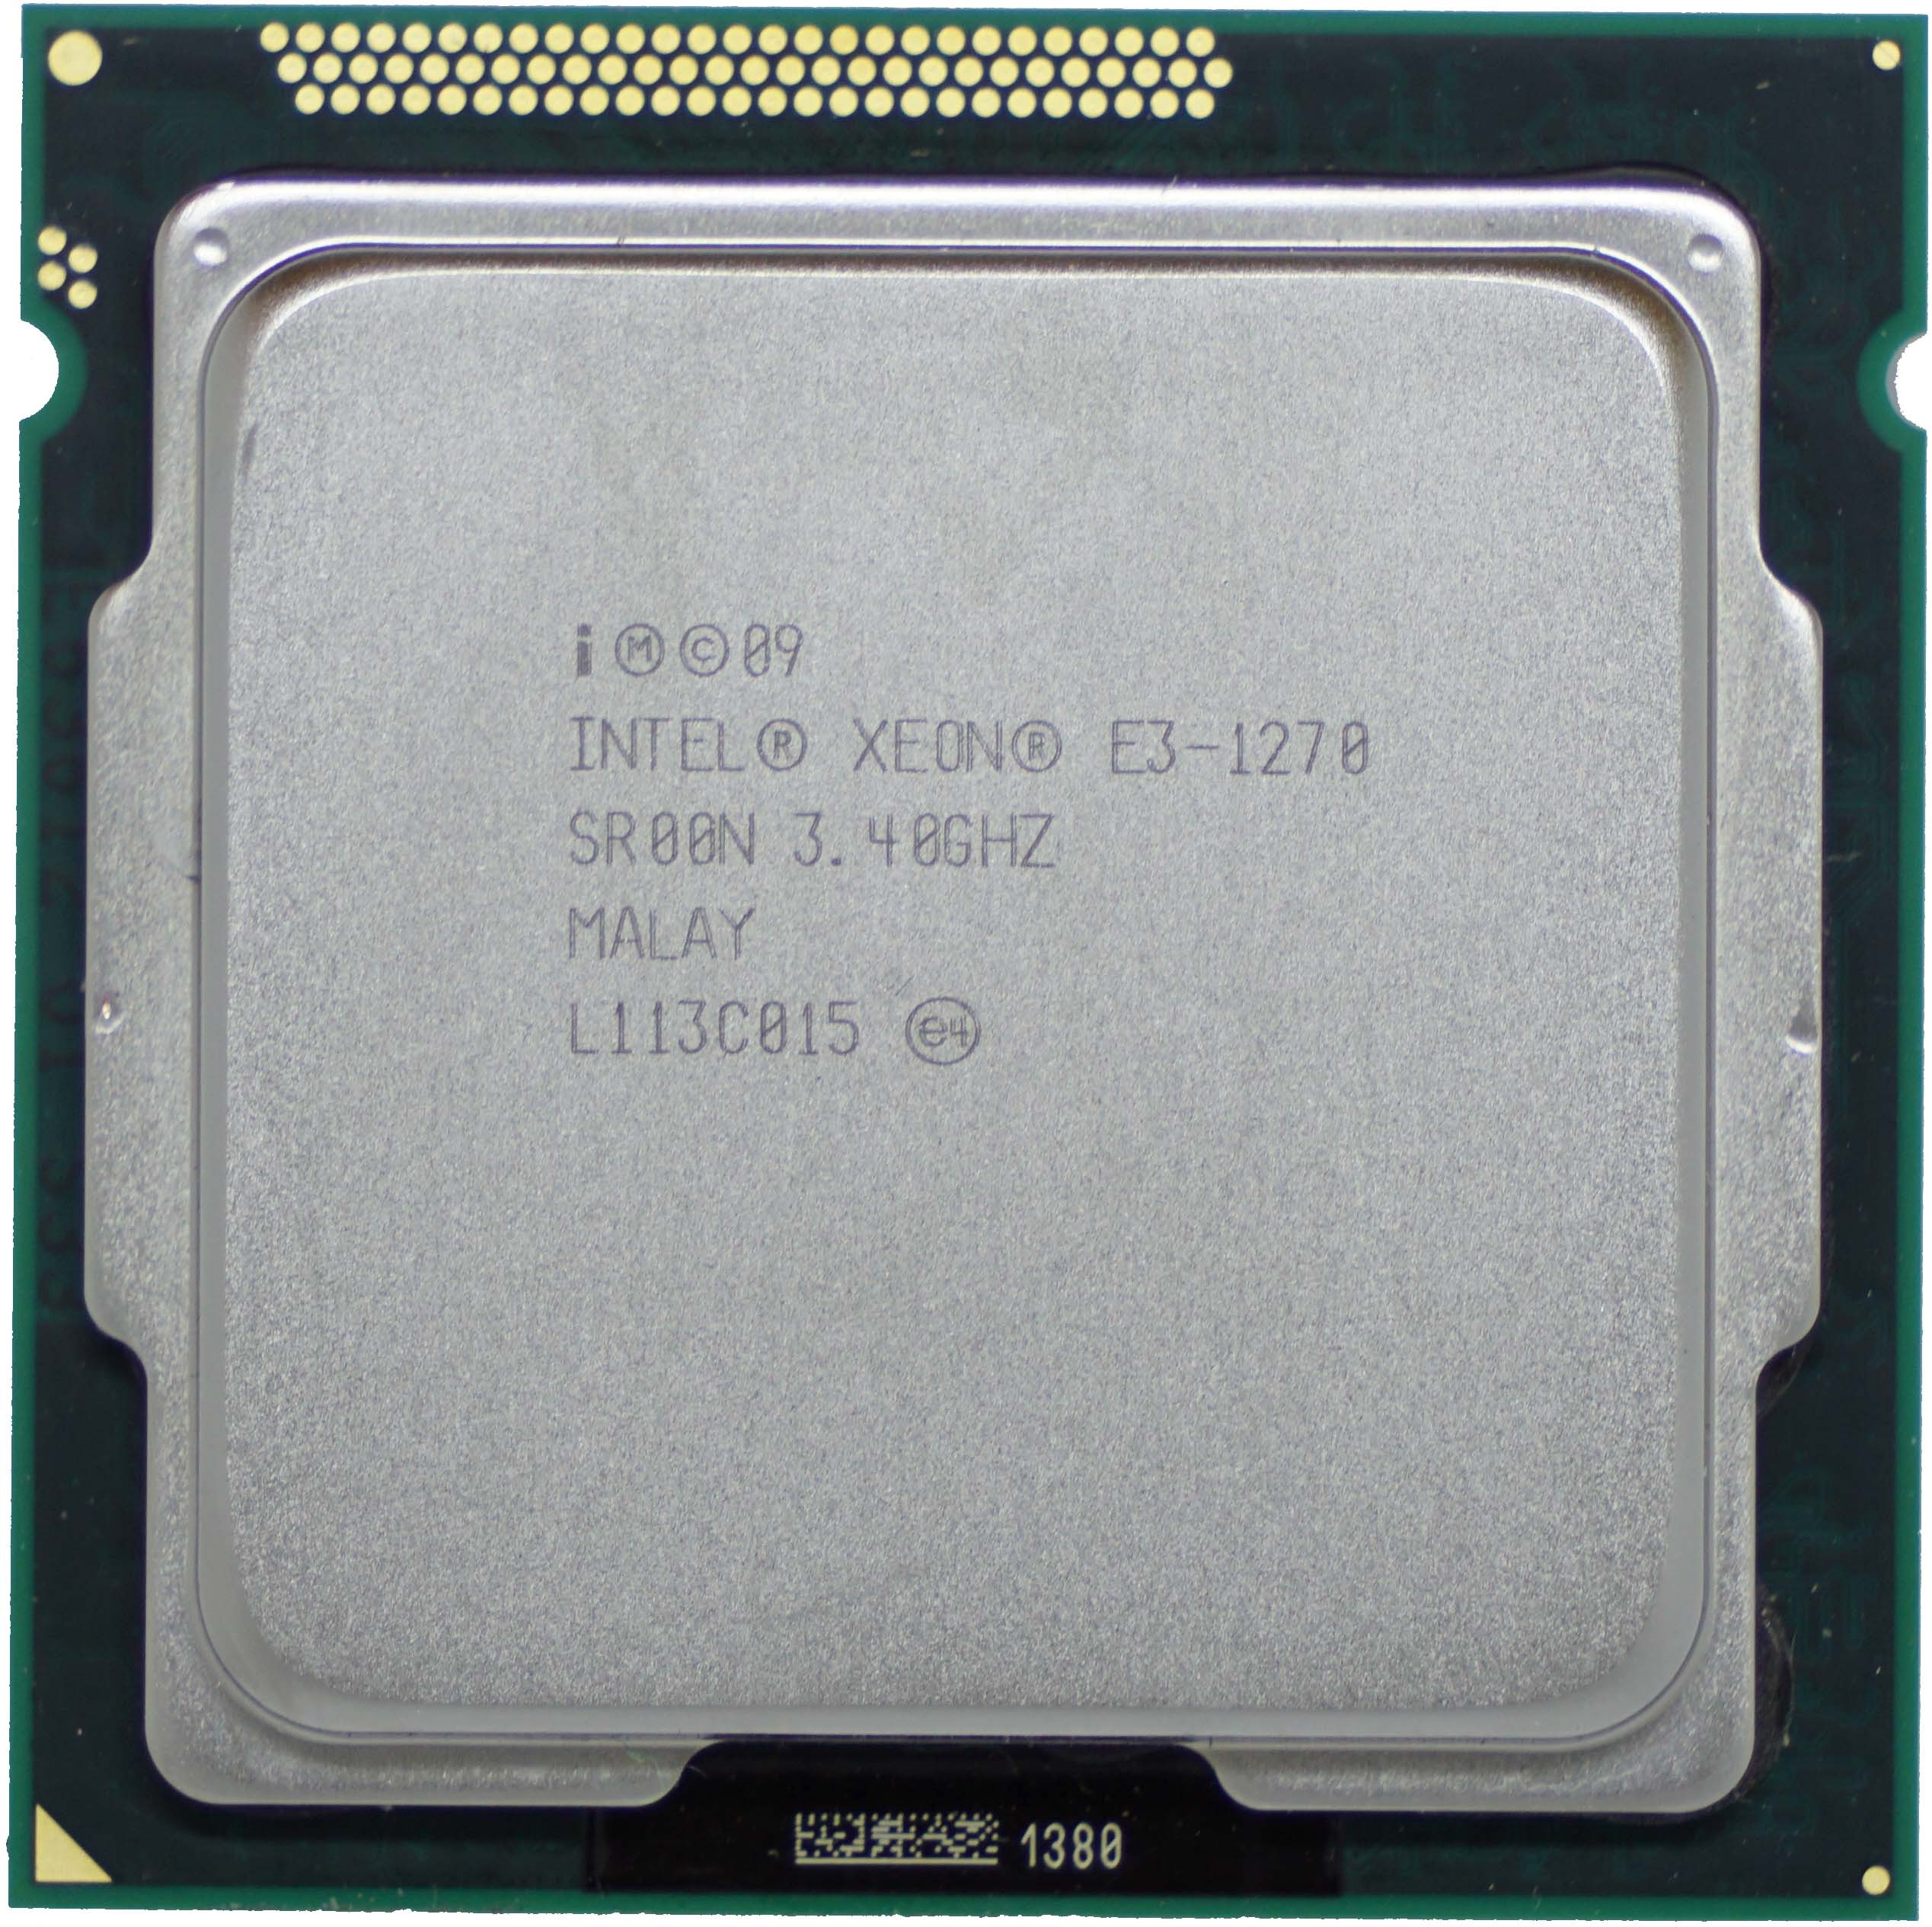 Intel Xeon E3-1270 V1 (SR00N) 3.40Ghz Quad (4) Core LGA1155 80W CPU